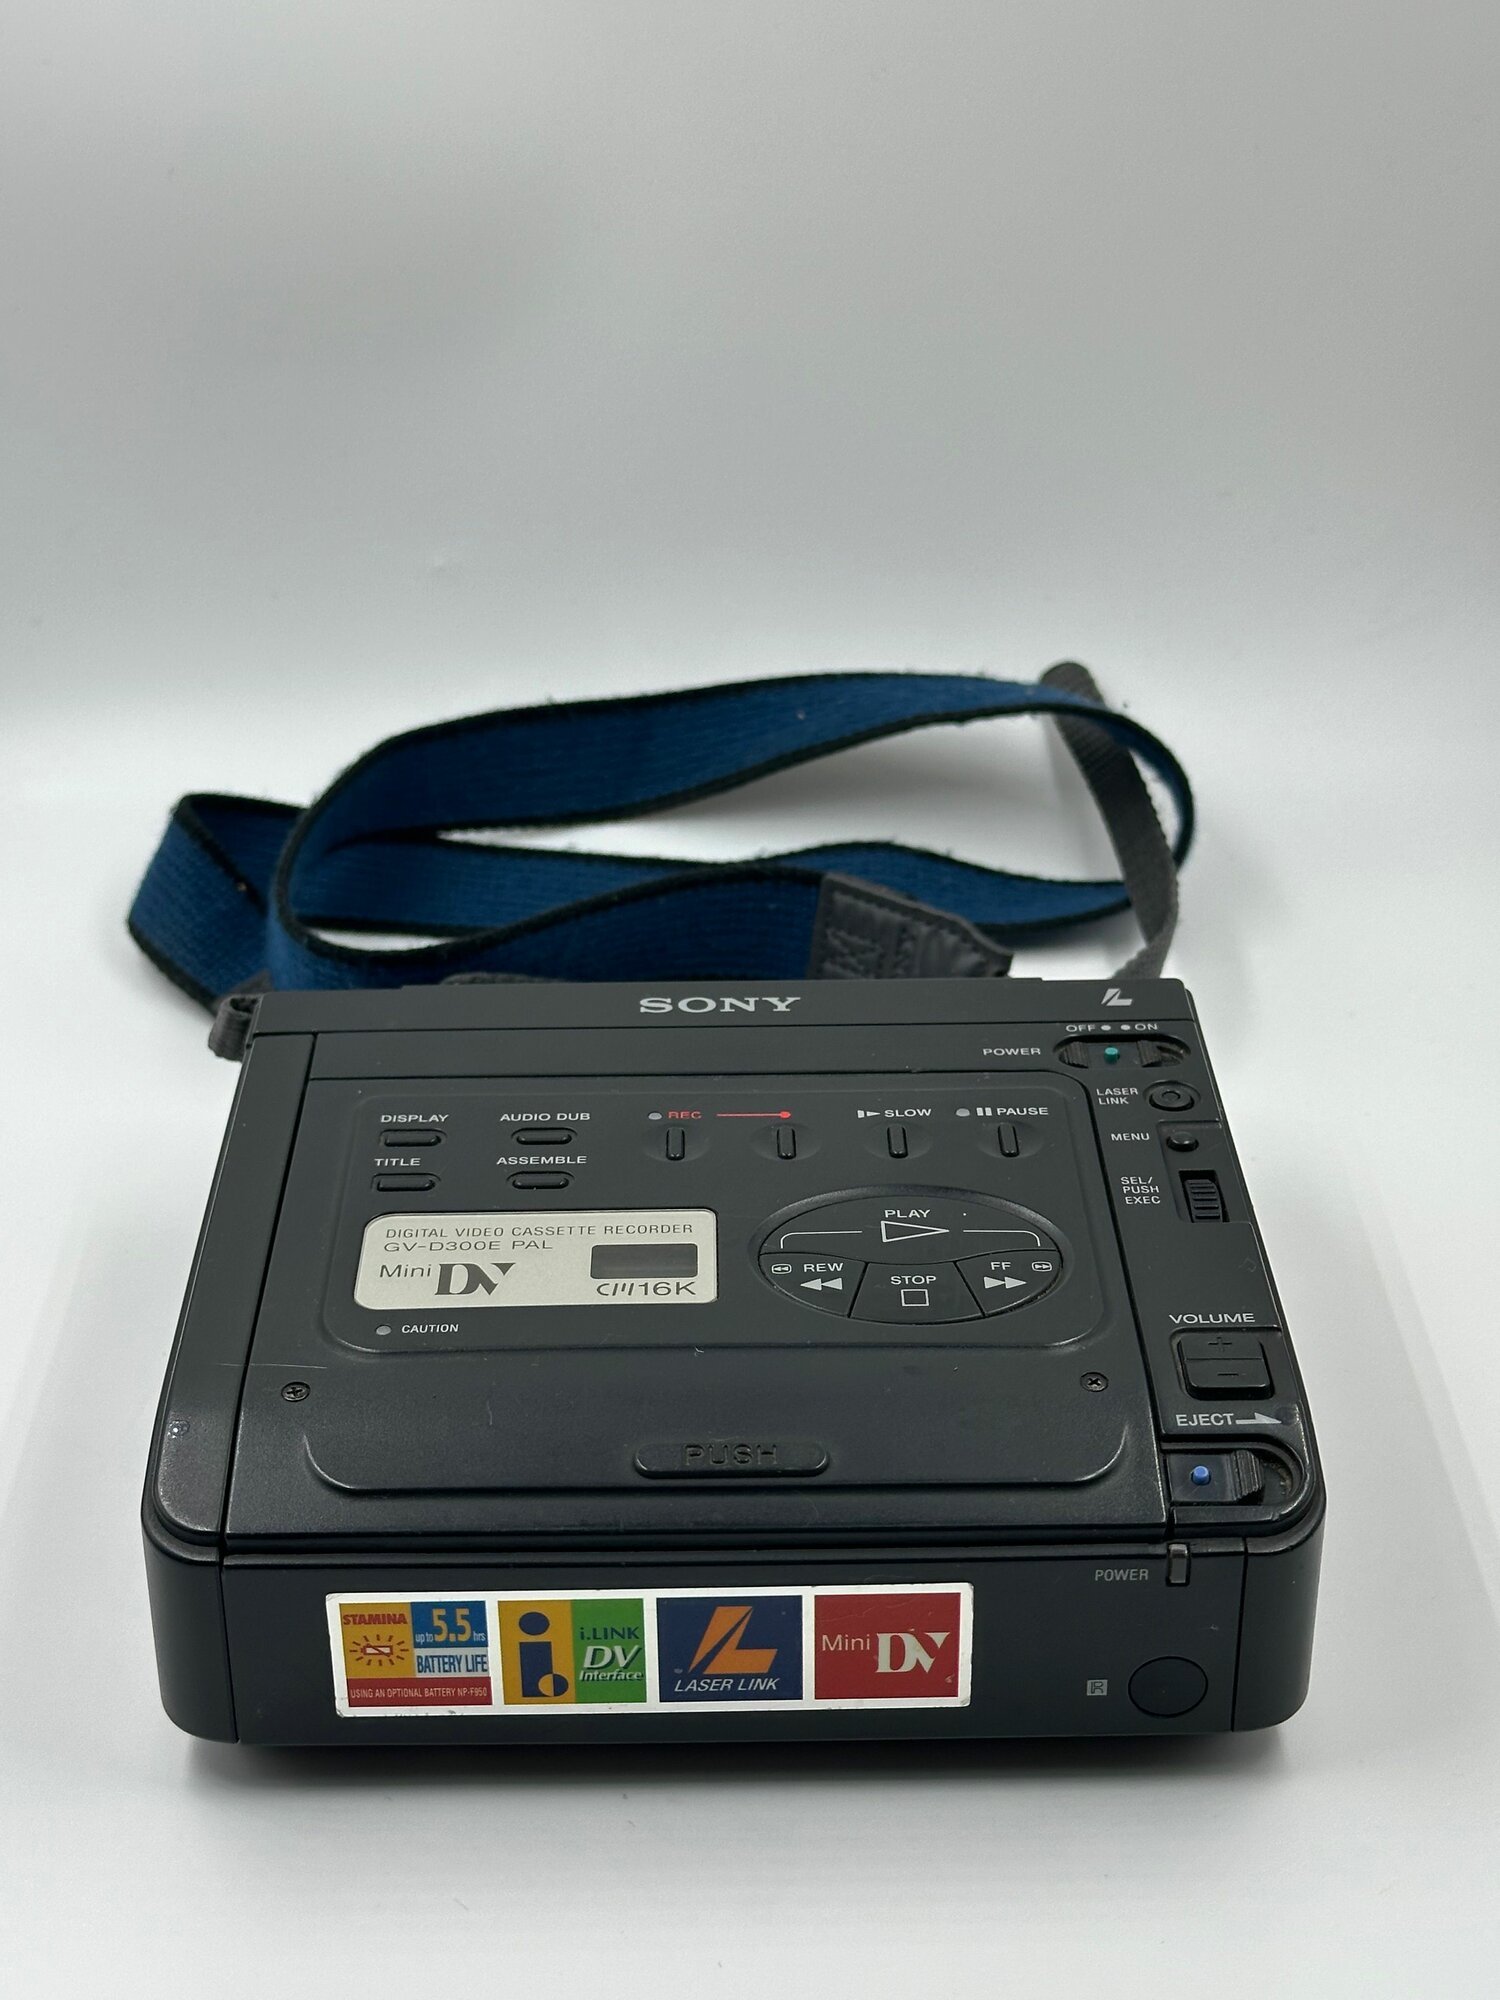 Кассетный Видеорекордер SONY GV-D300E PAL Mini Digital Video Walkman Recorder Player Япония!